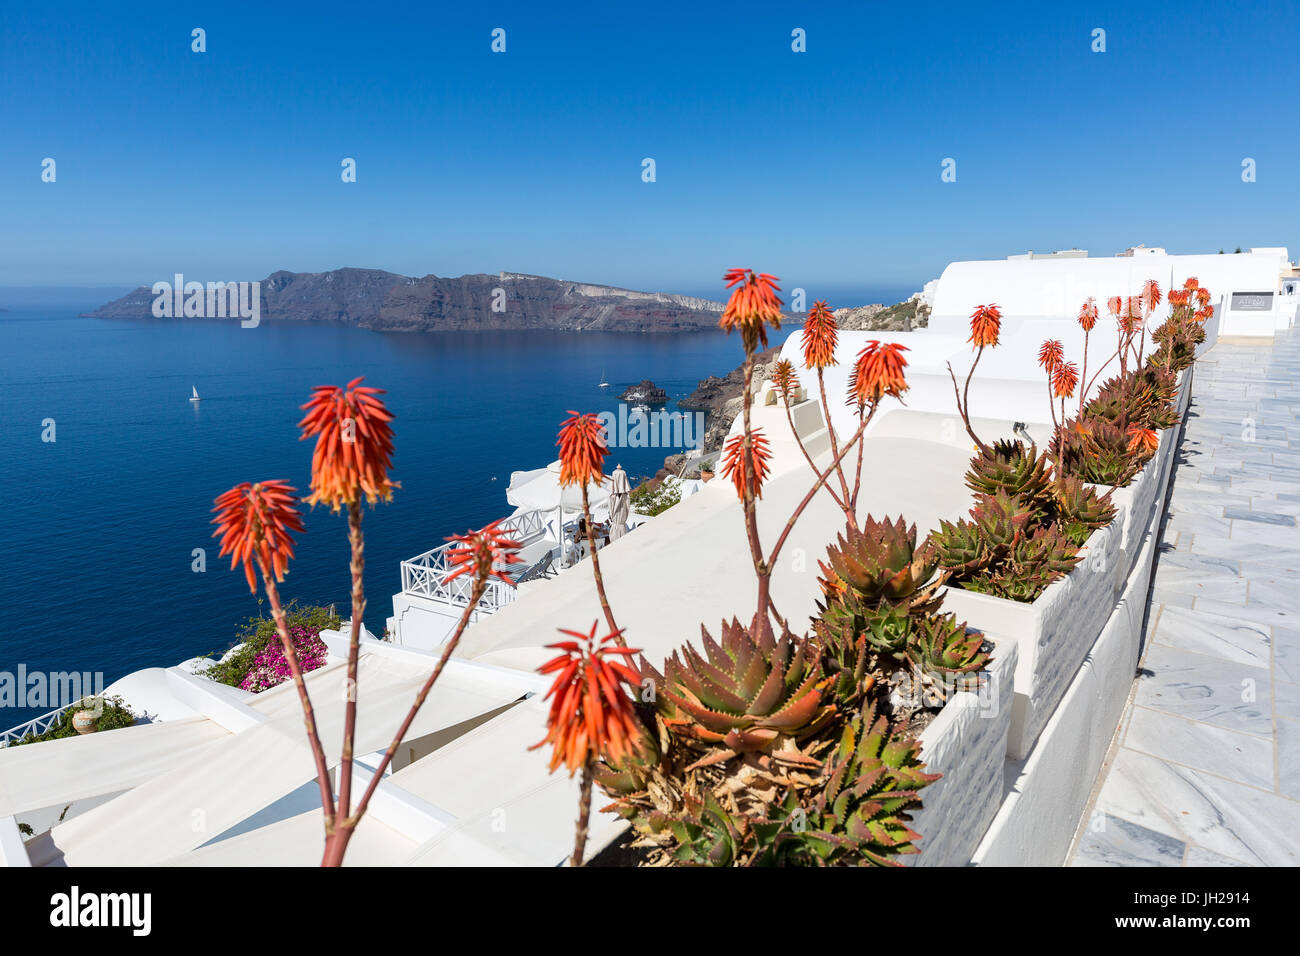 Red hot poker flowering plants line the street in Oia, Santorini, Cyclades, Greek Islands, Greece Stock Photo